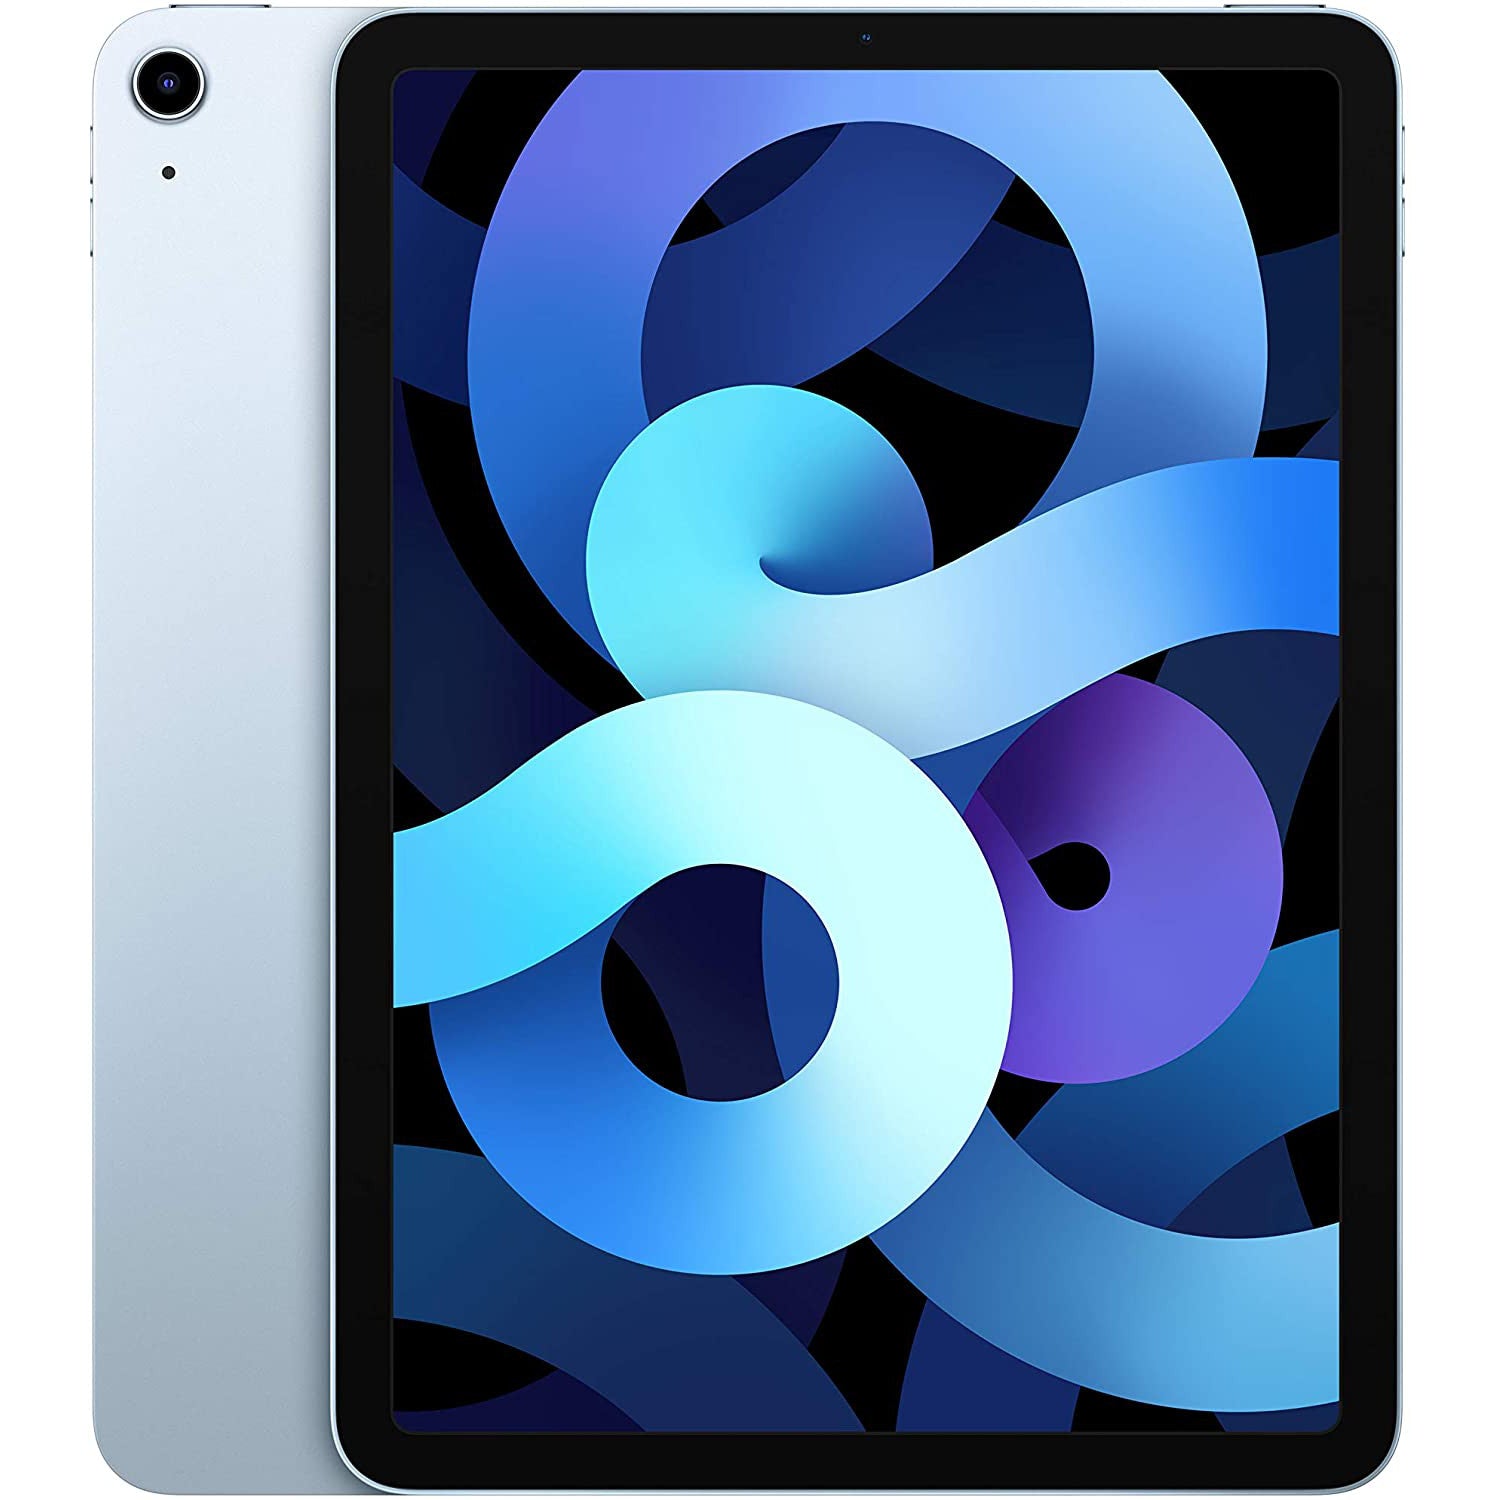 iPad Air 4 64GB WiFi - Blau - Makellos